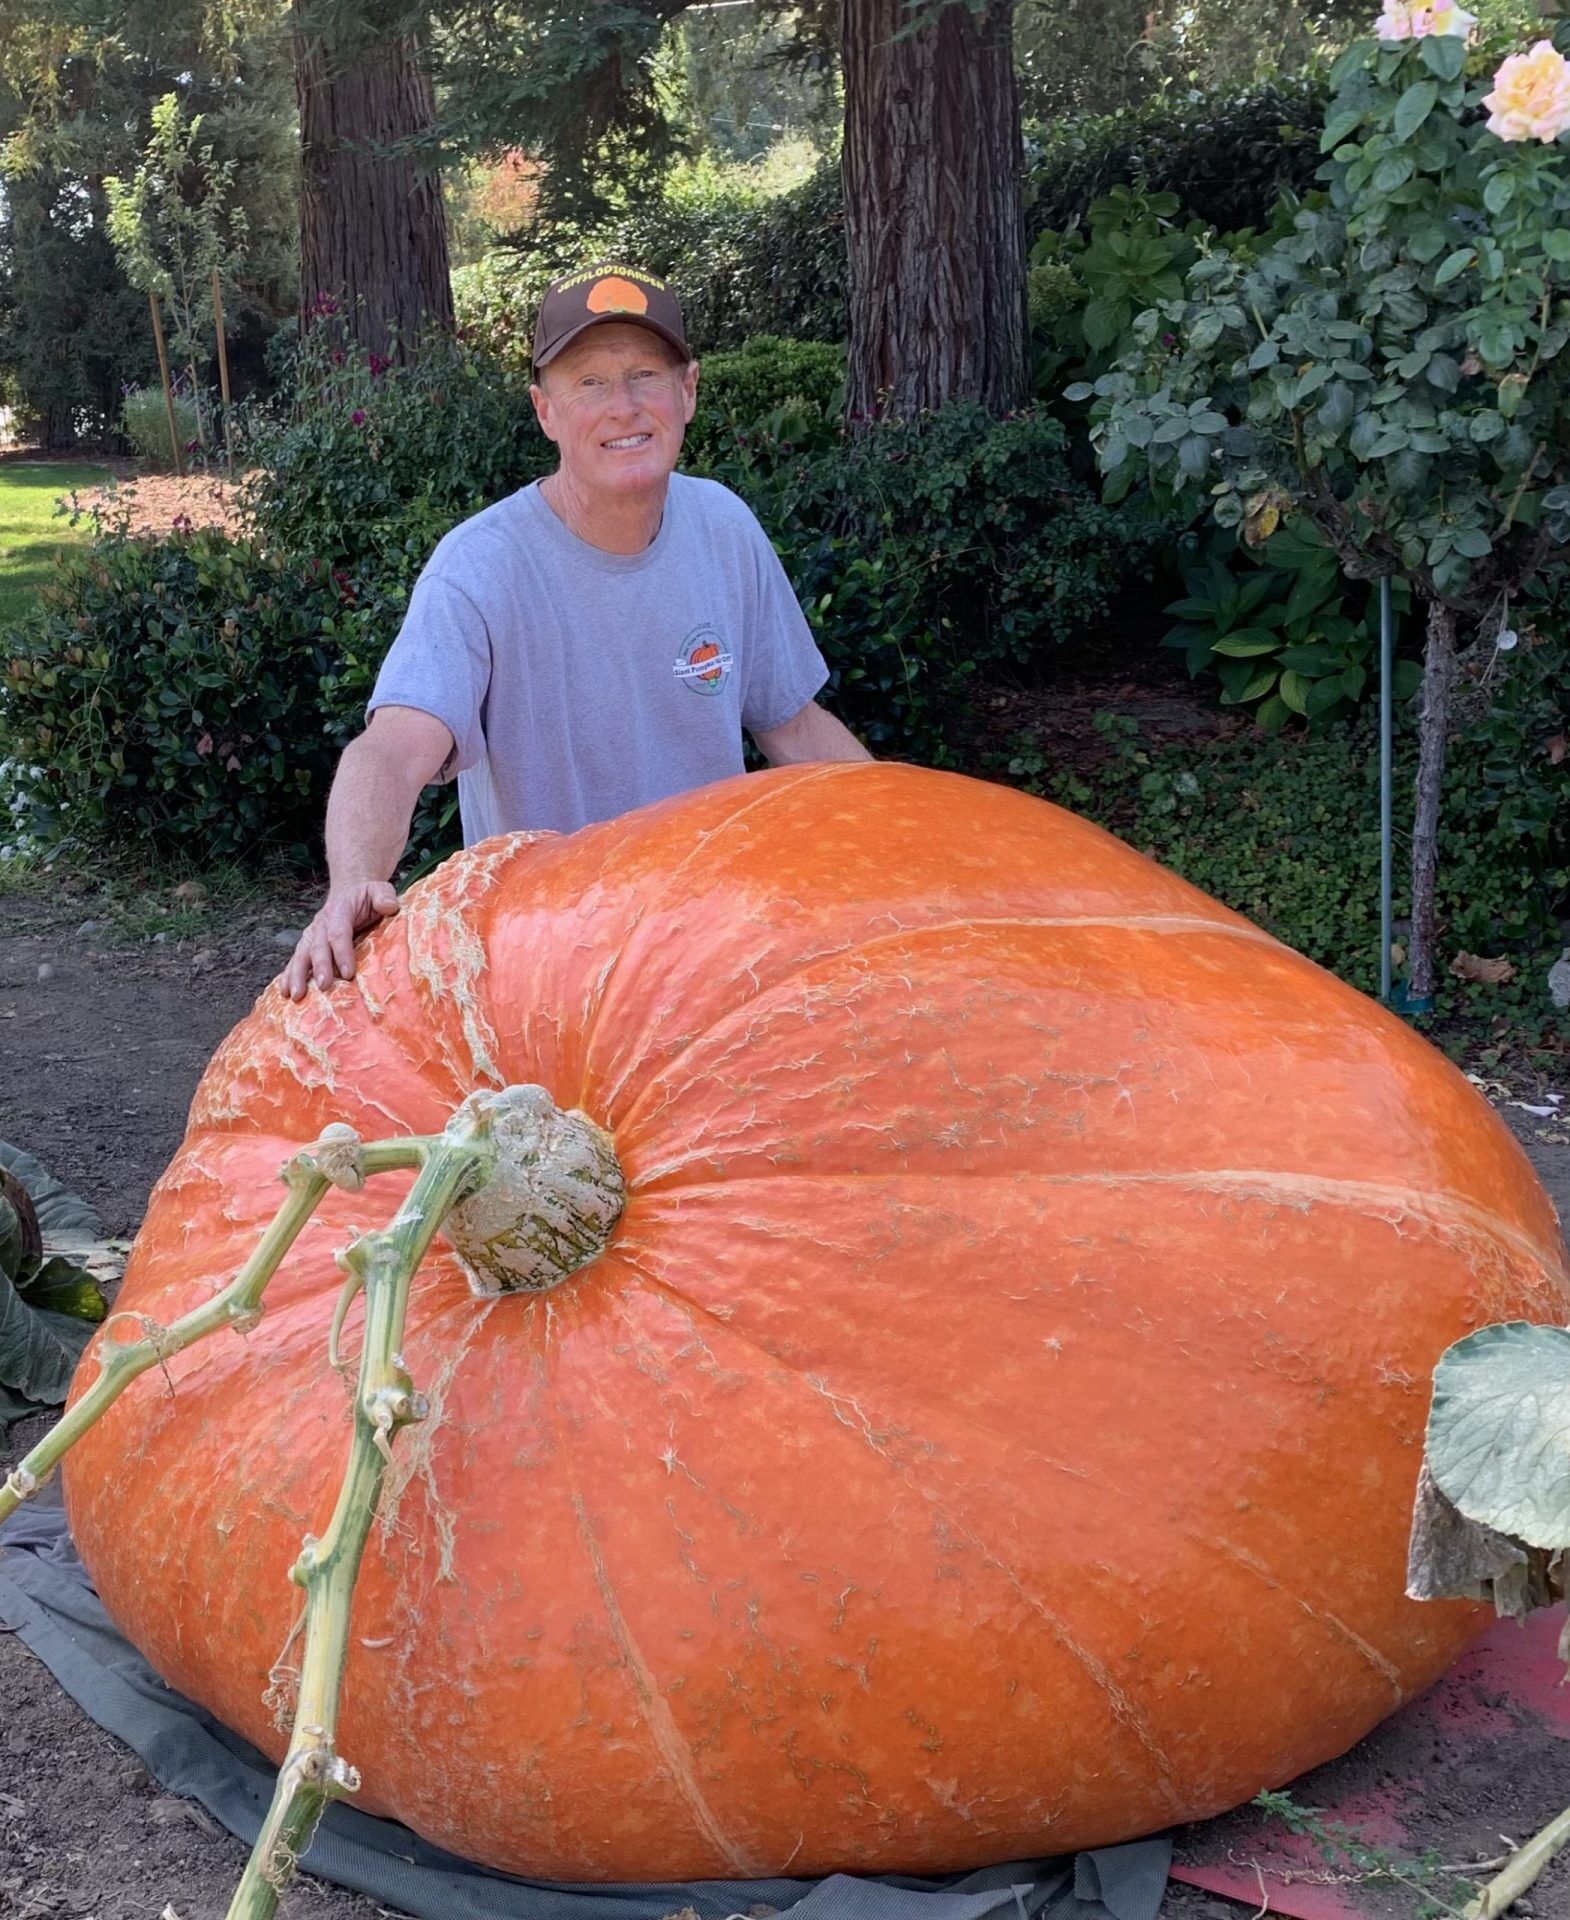 Hue the giant pumpkin.